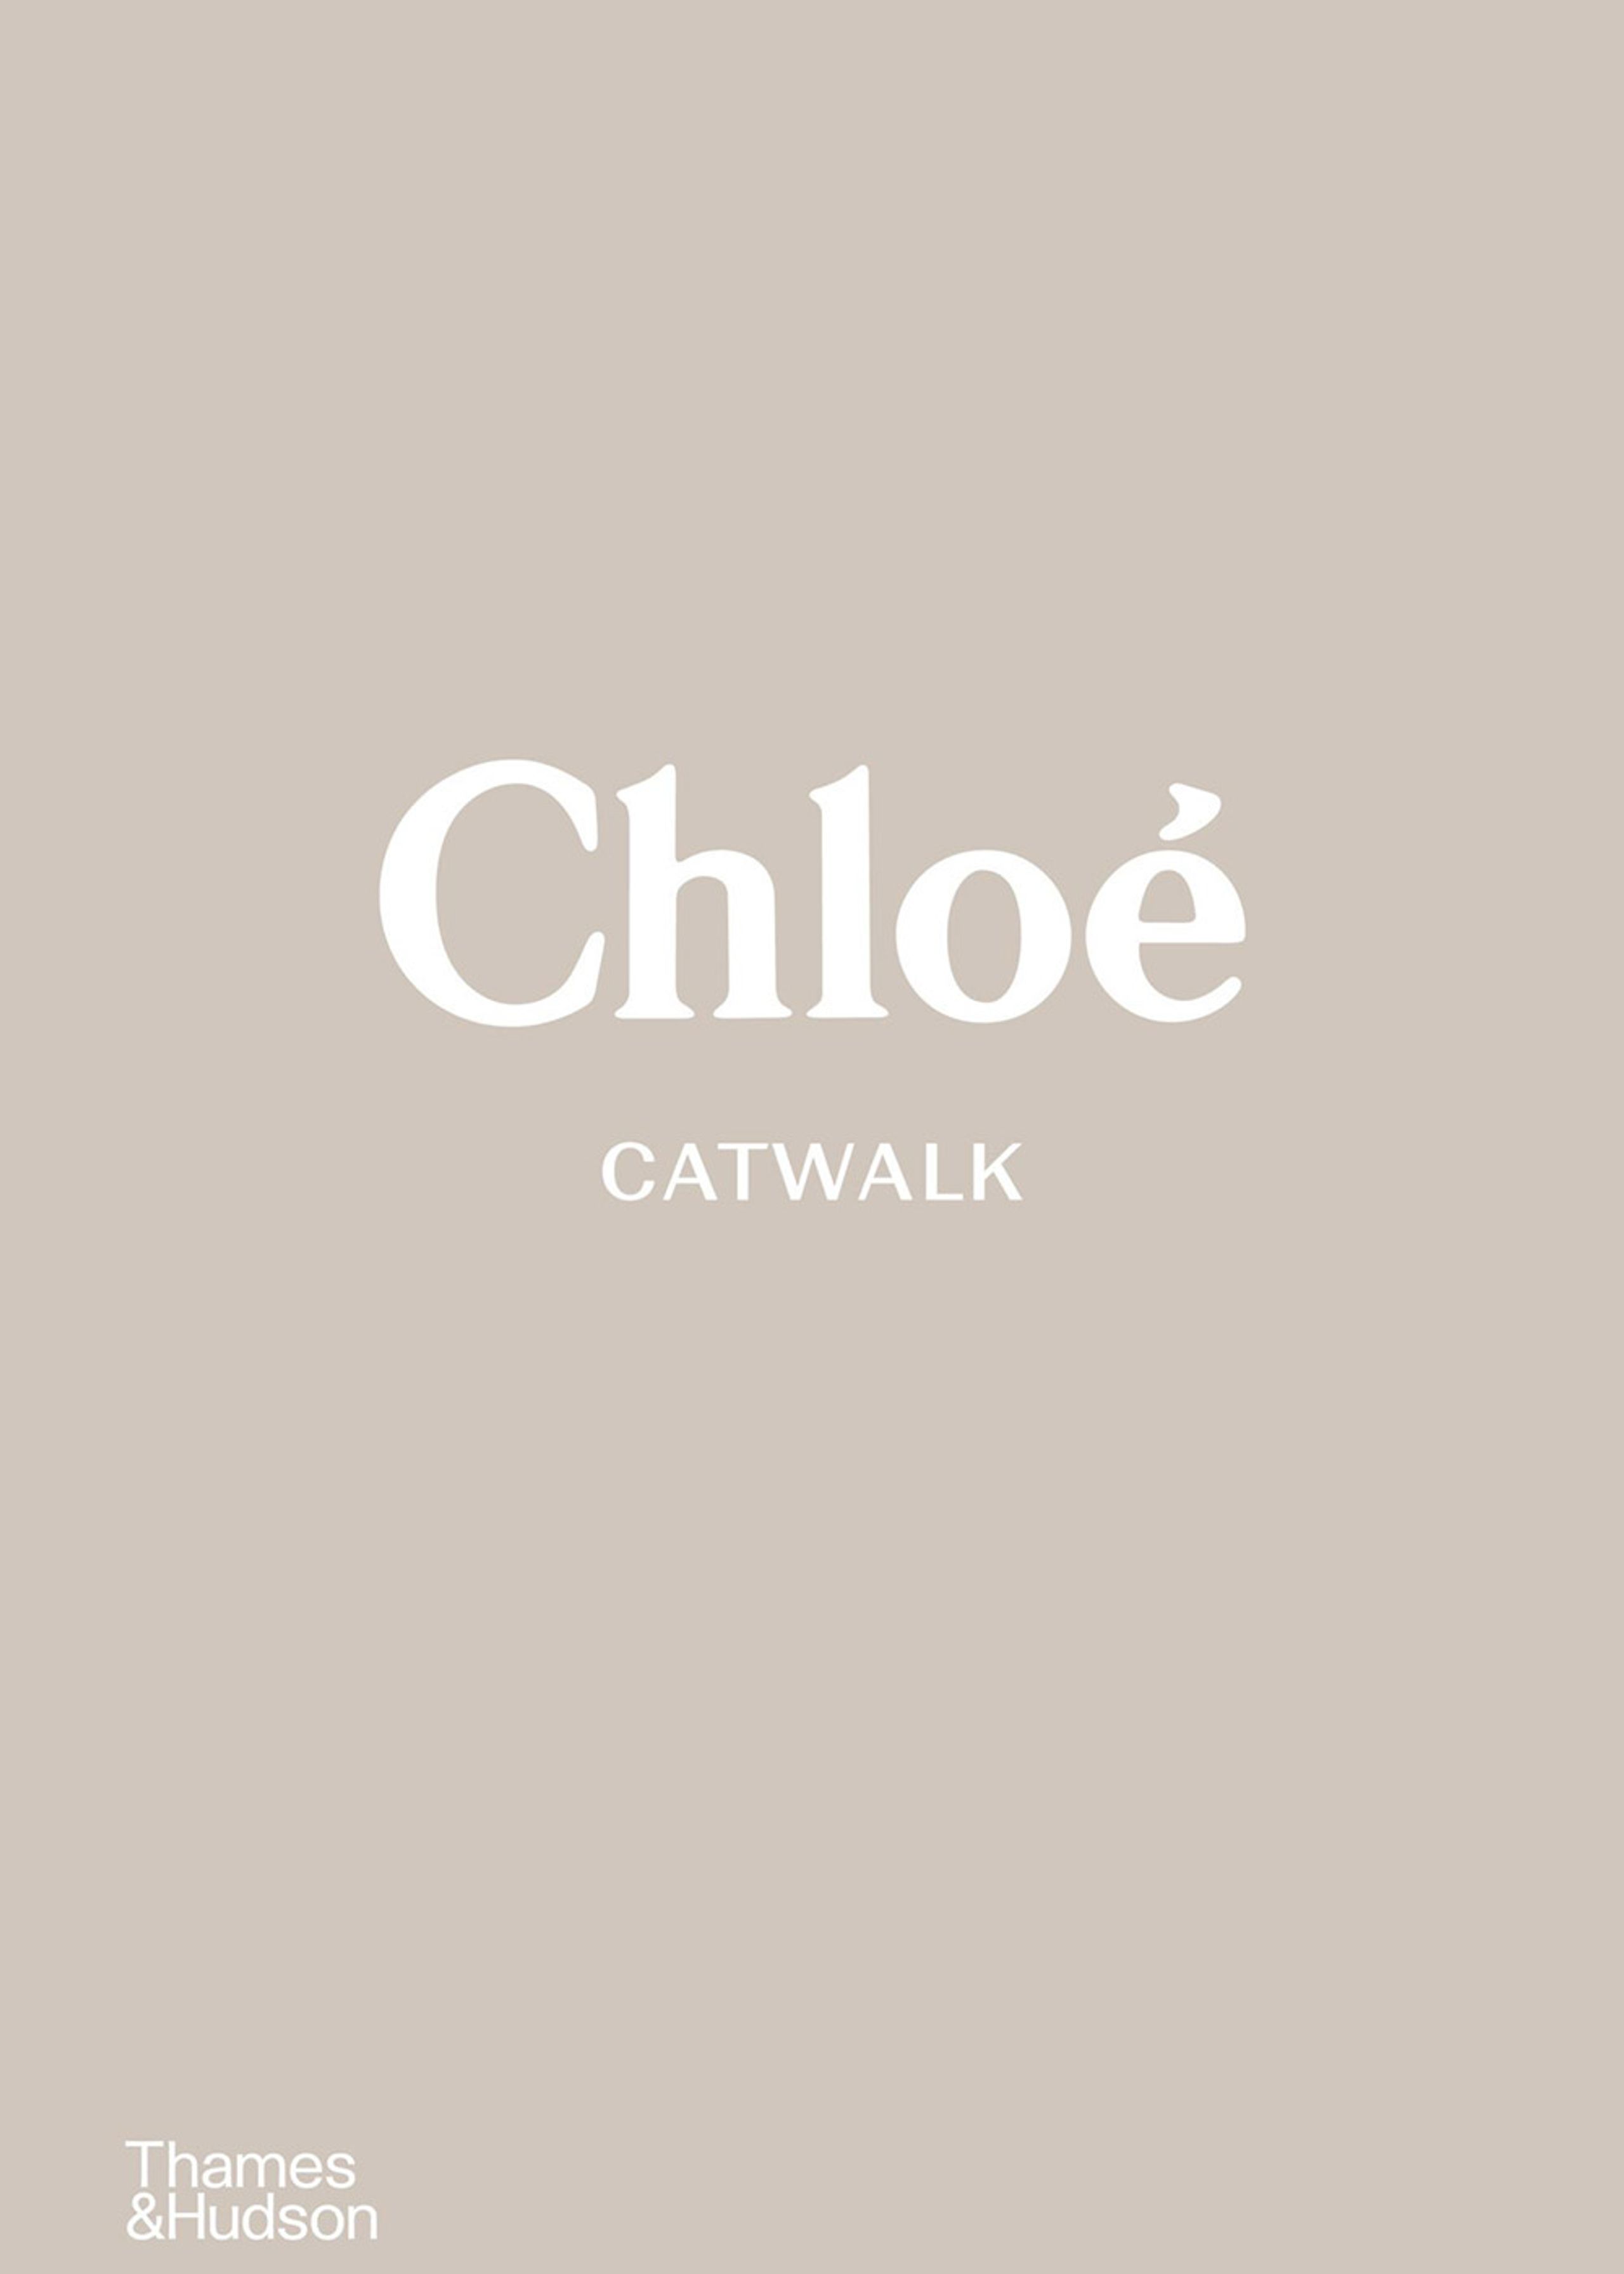 New Mags - Bog - Chloé - Catwalk - Lou Stoppard & Suzy Menkes